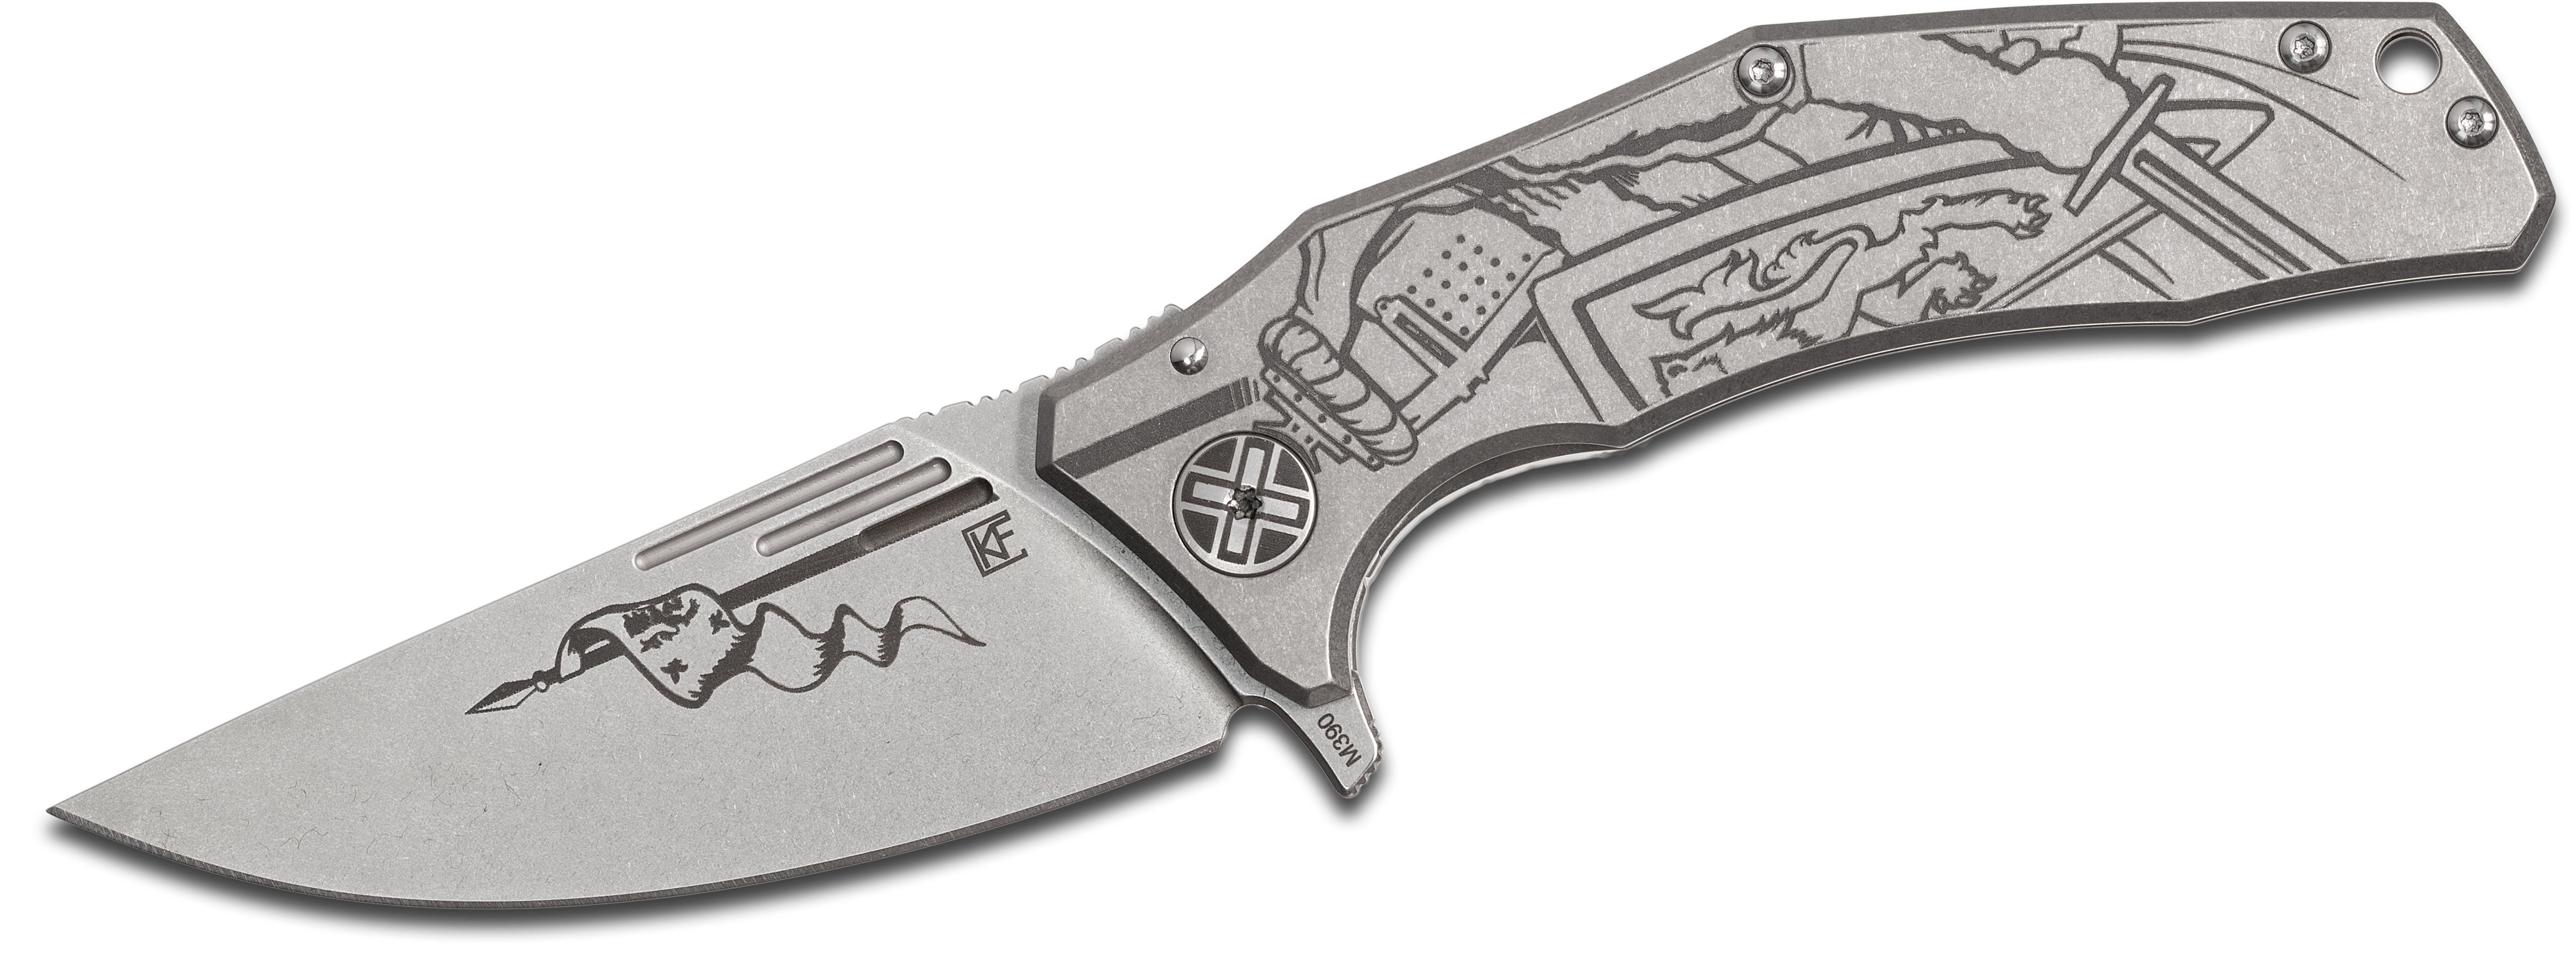 laser engraved titanium knife